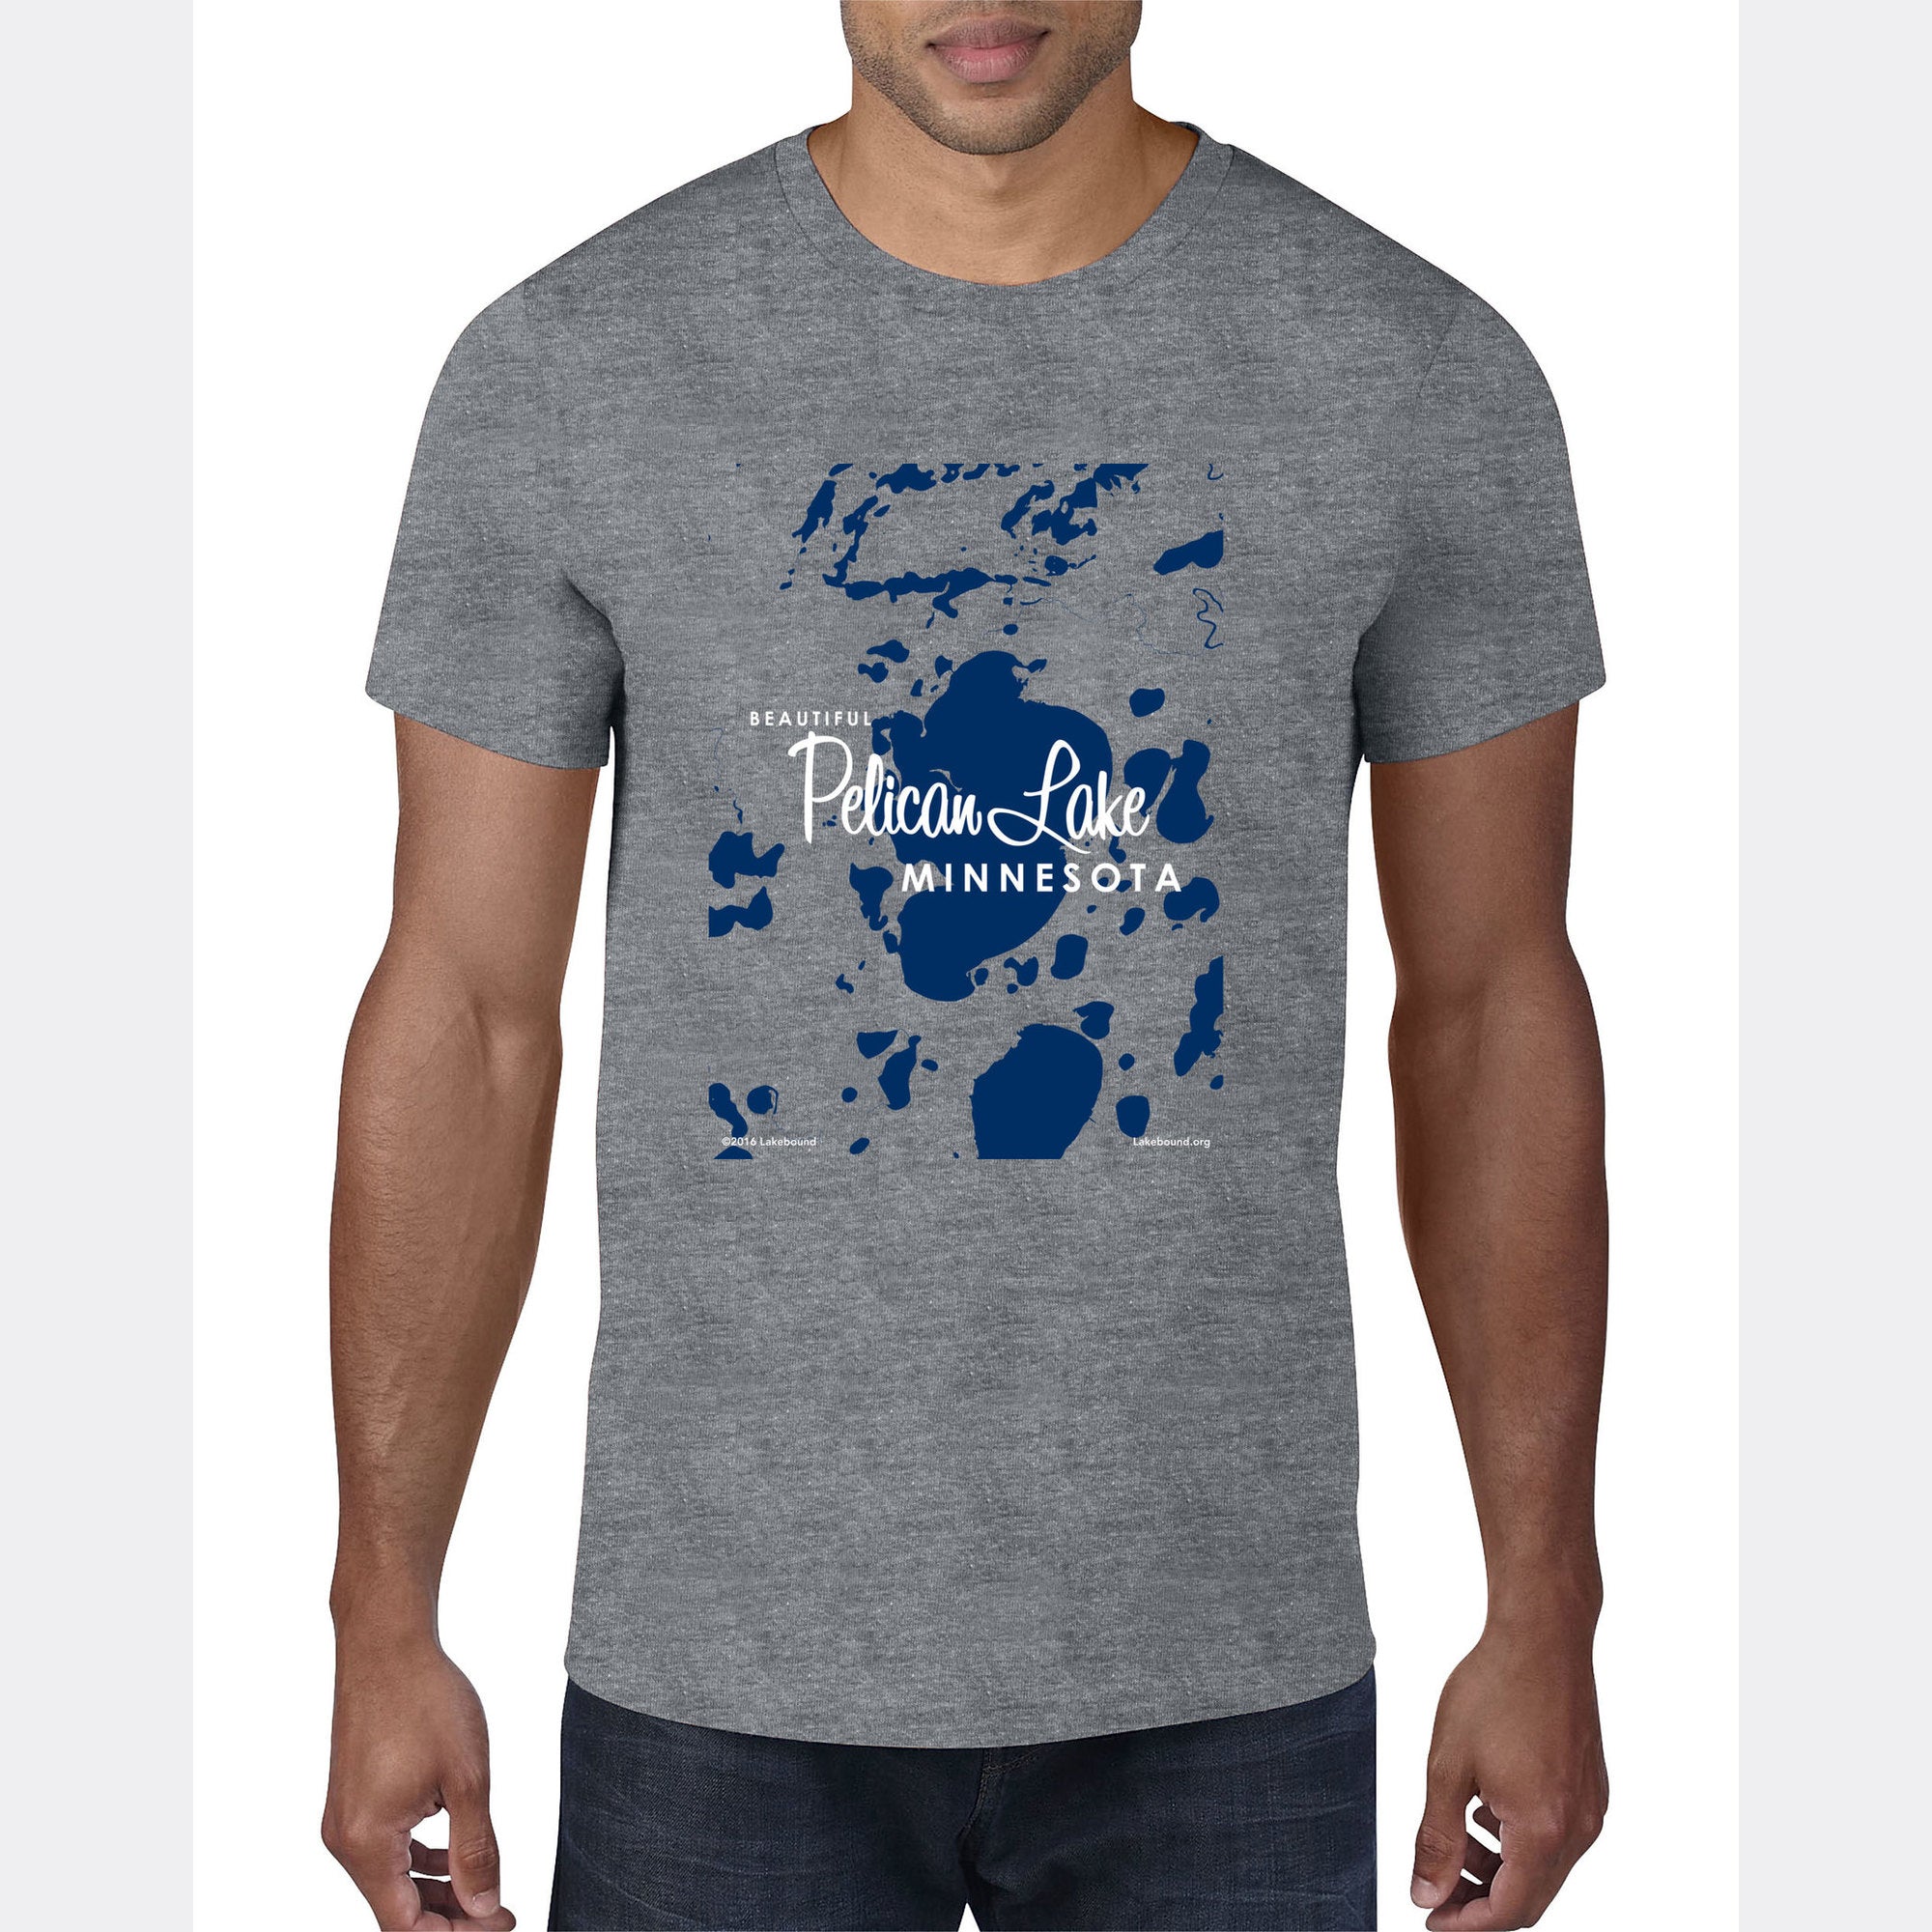 Pelican Lake Minnesota (Crow Wing County) , T-Shirt